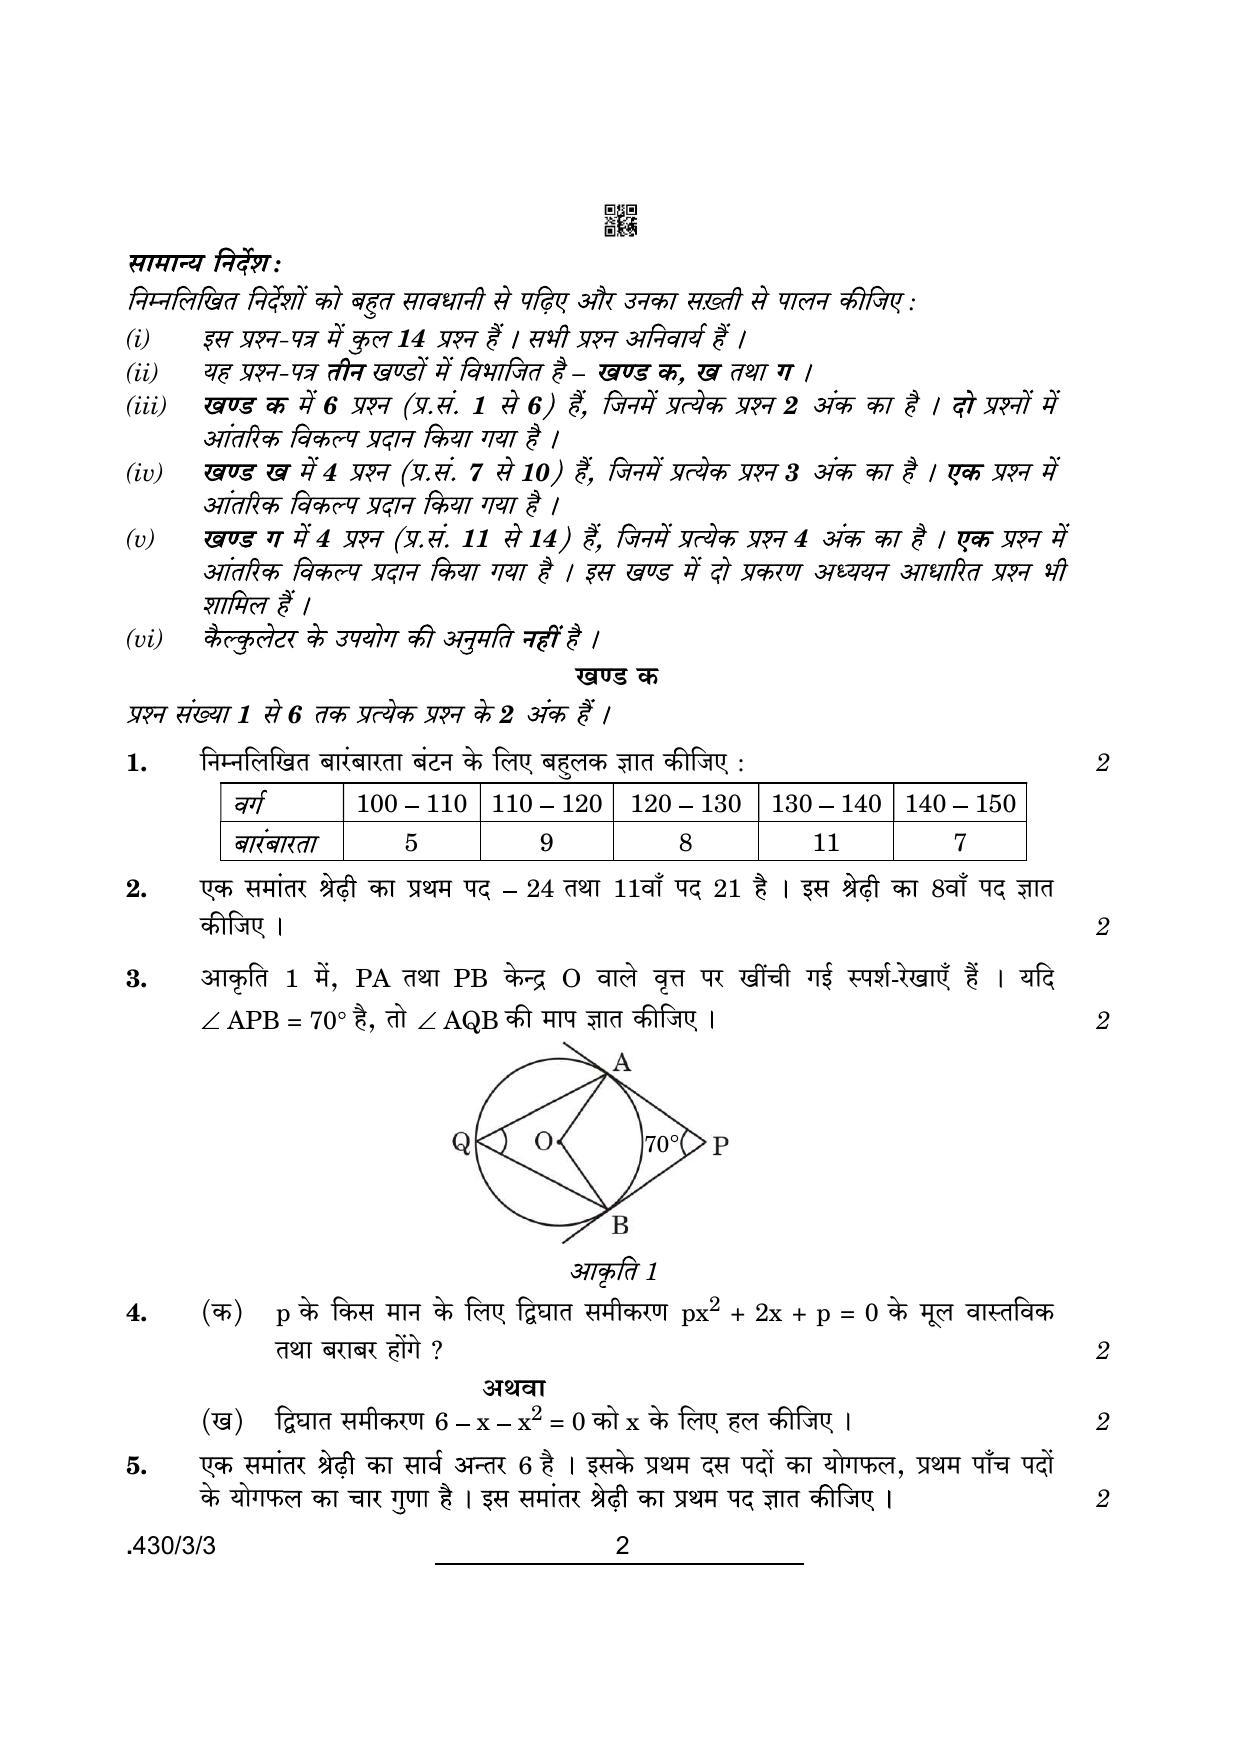 CBSE Class 10 Maths Basic (430/3/3 - SET 3) 2022 Question Paper - Page 2